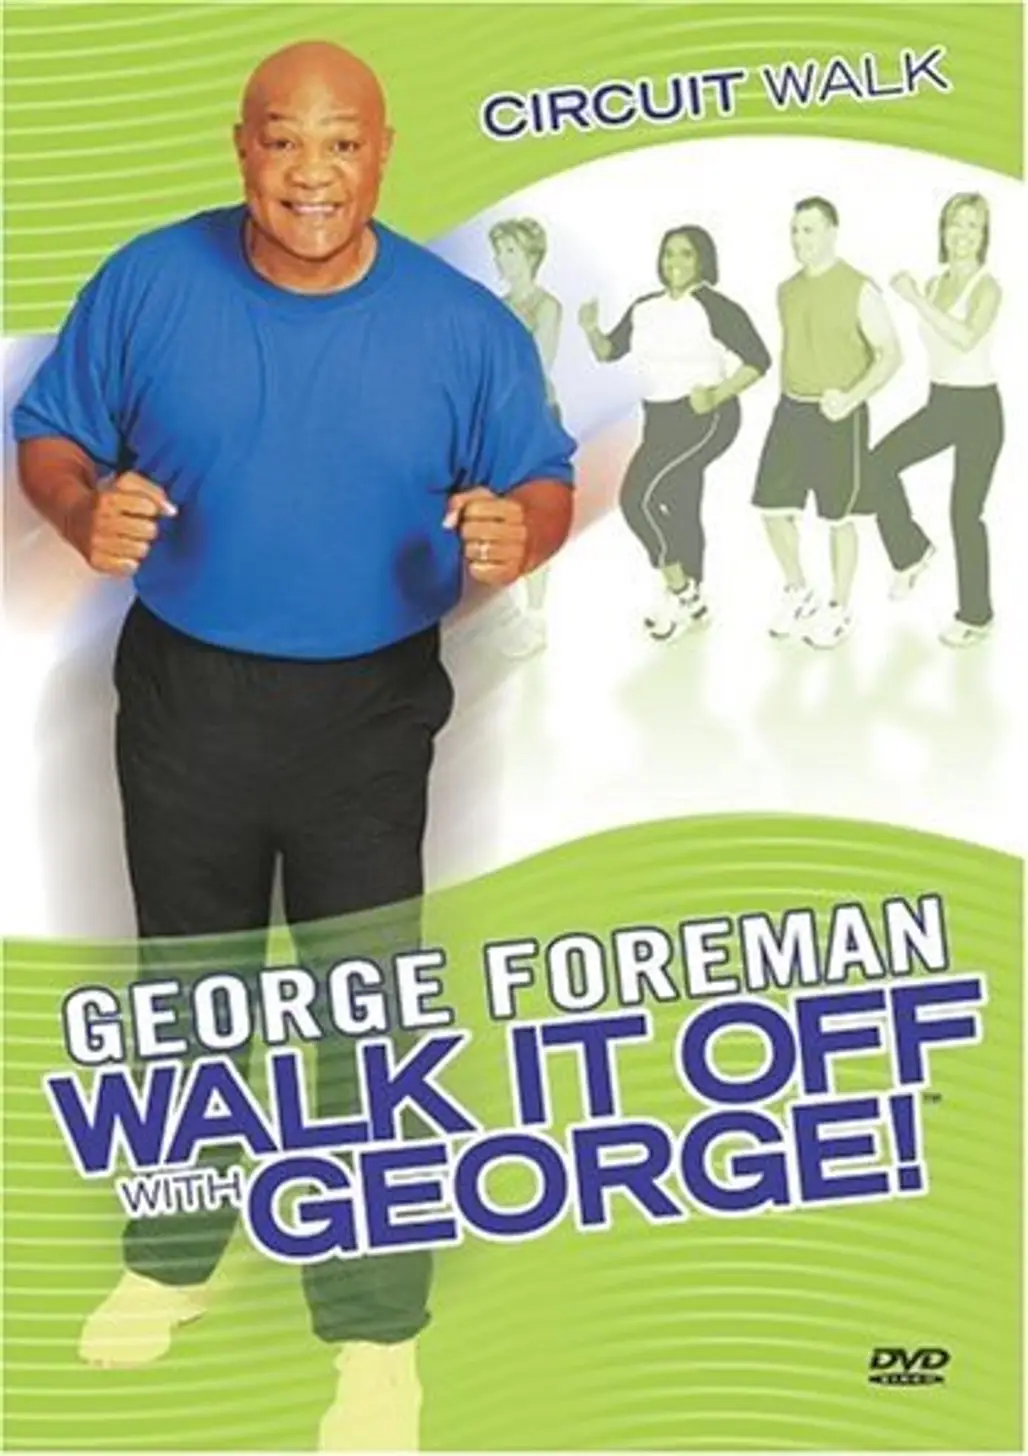 George Foreman Circuit Walk